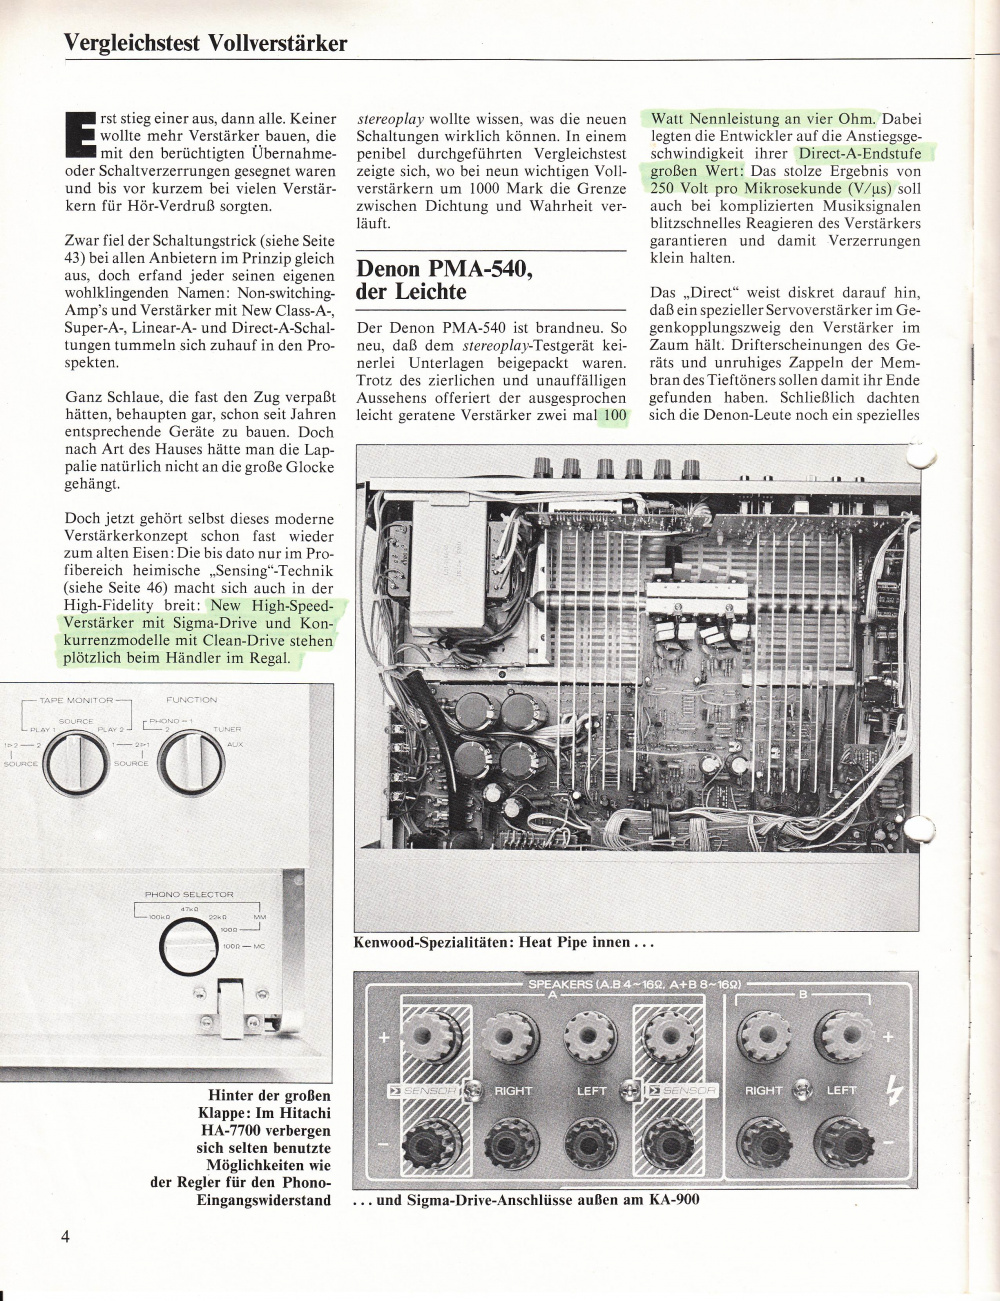 Stereoplay April 1981 9 Verstärker im Vergleich 04.jpg